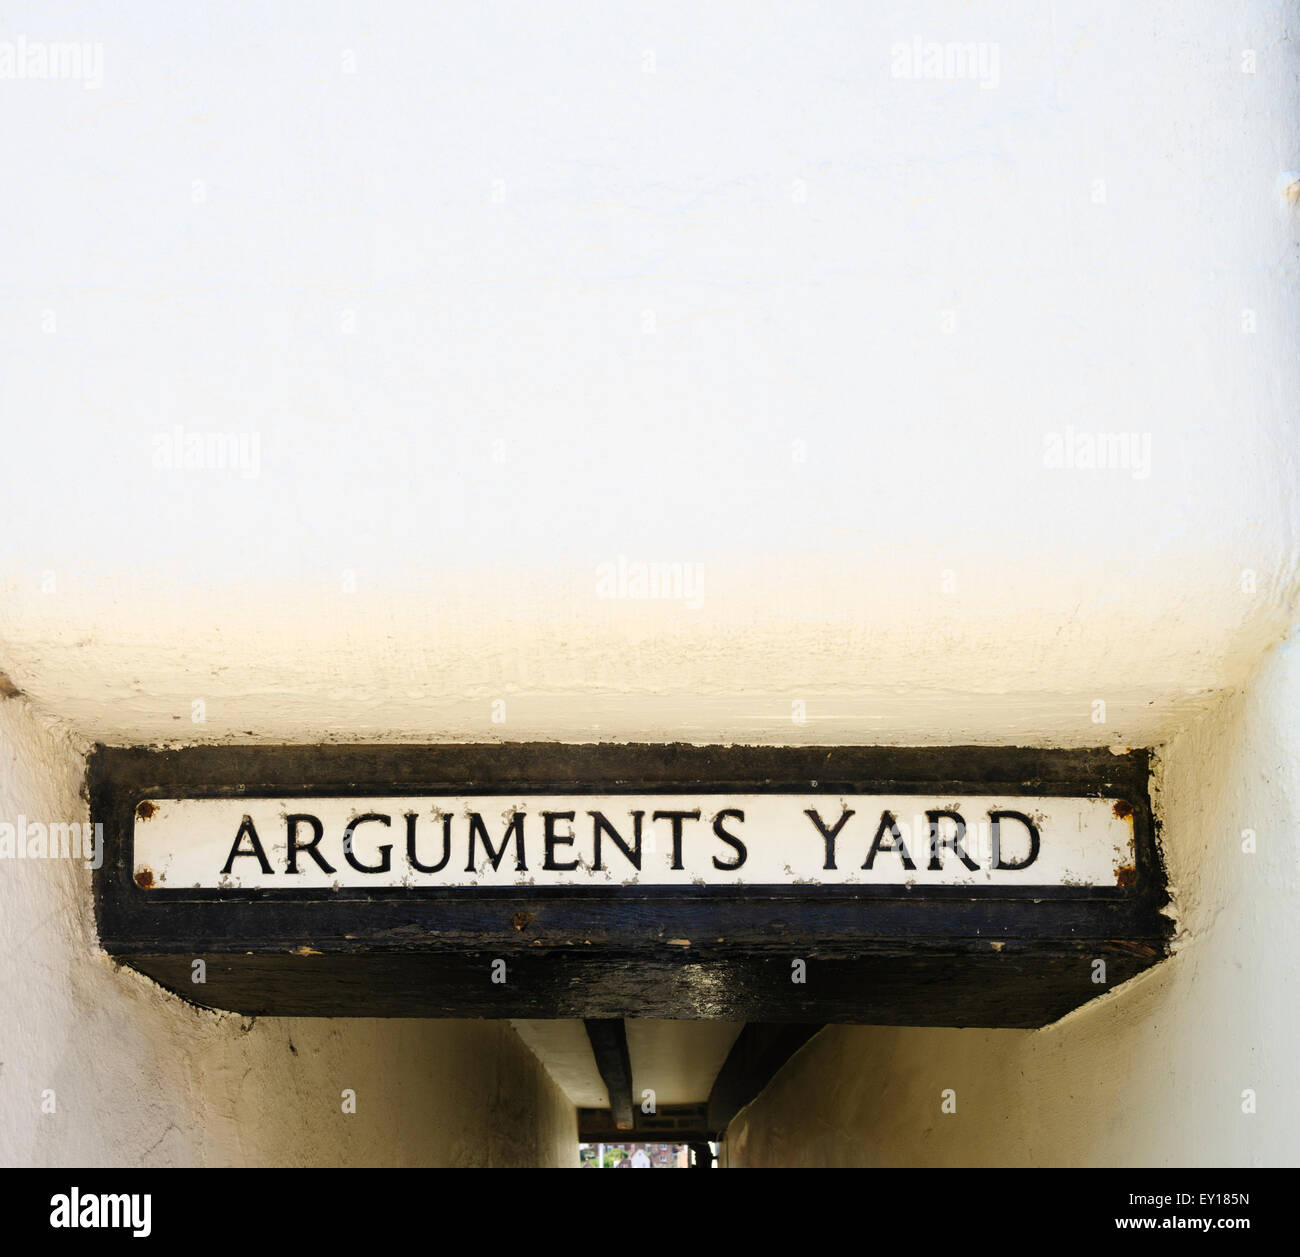 Arguments Yard, Whitby Stock Photo